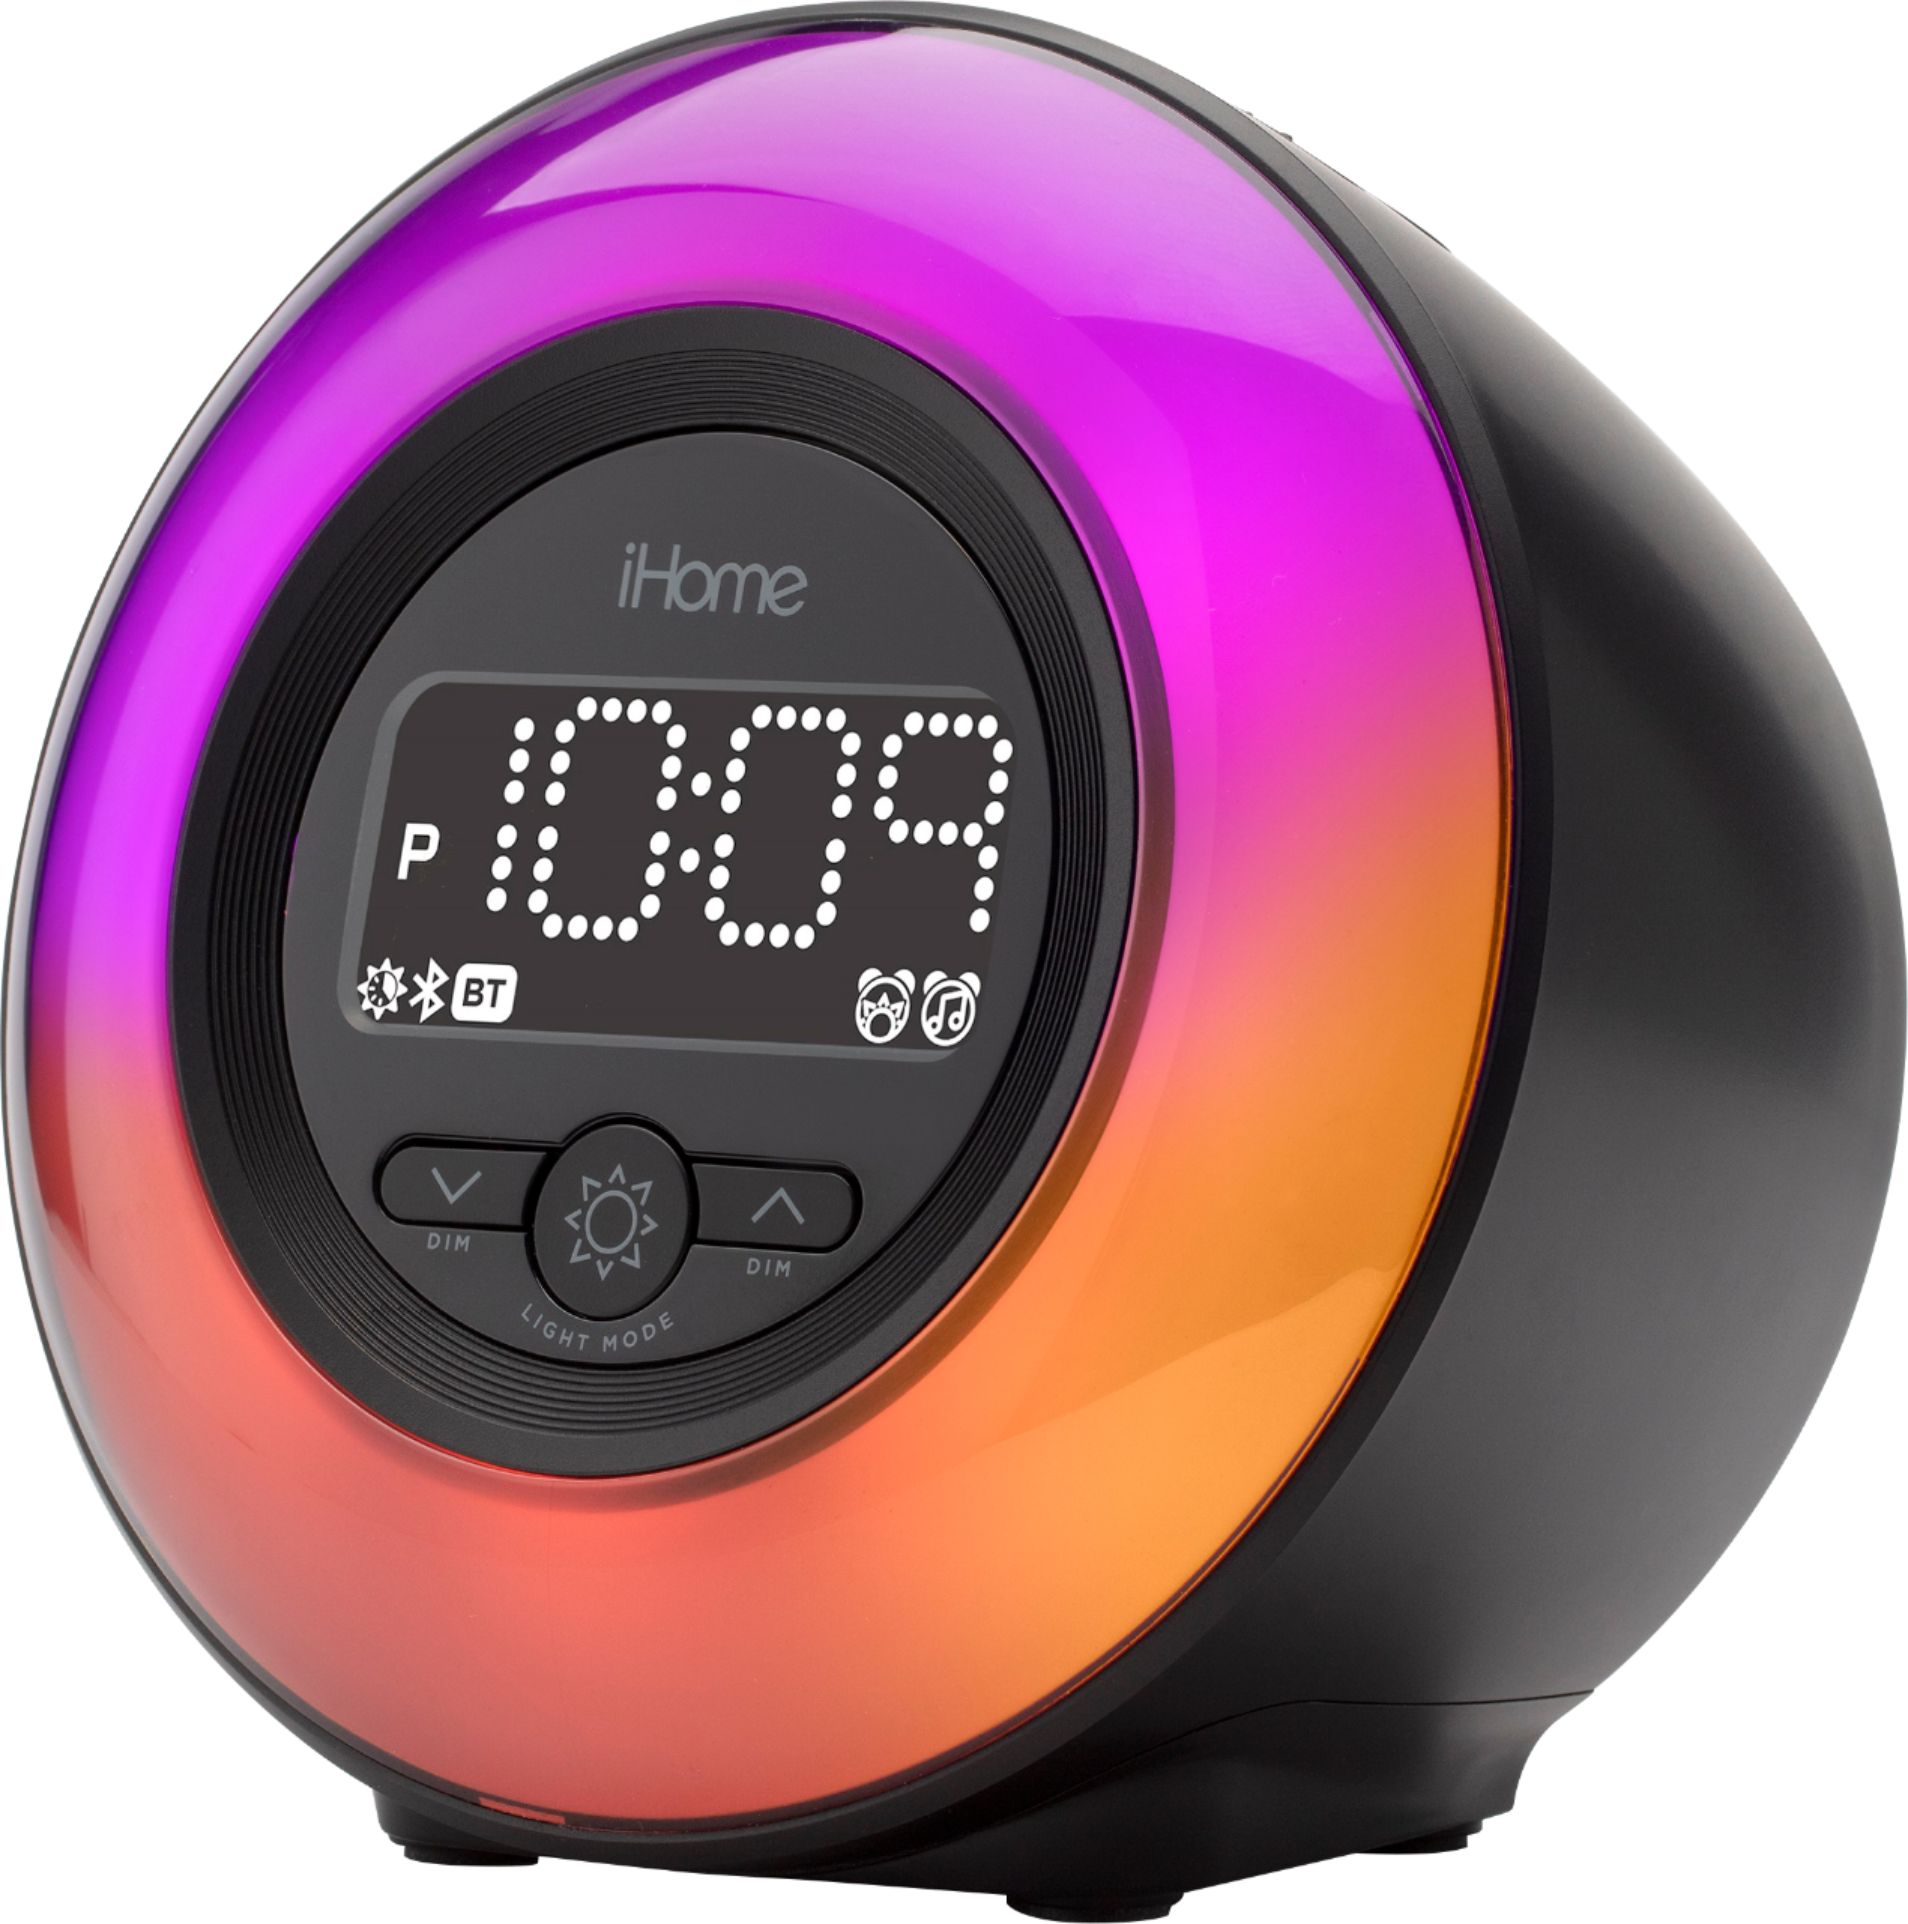 Angle View: iHome - PowerClock Glow - Bluetooth Color Changing FM Alarm Clock Radio - Black